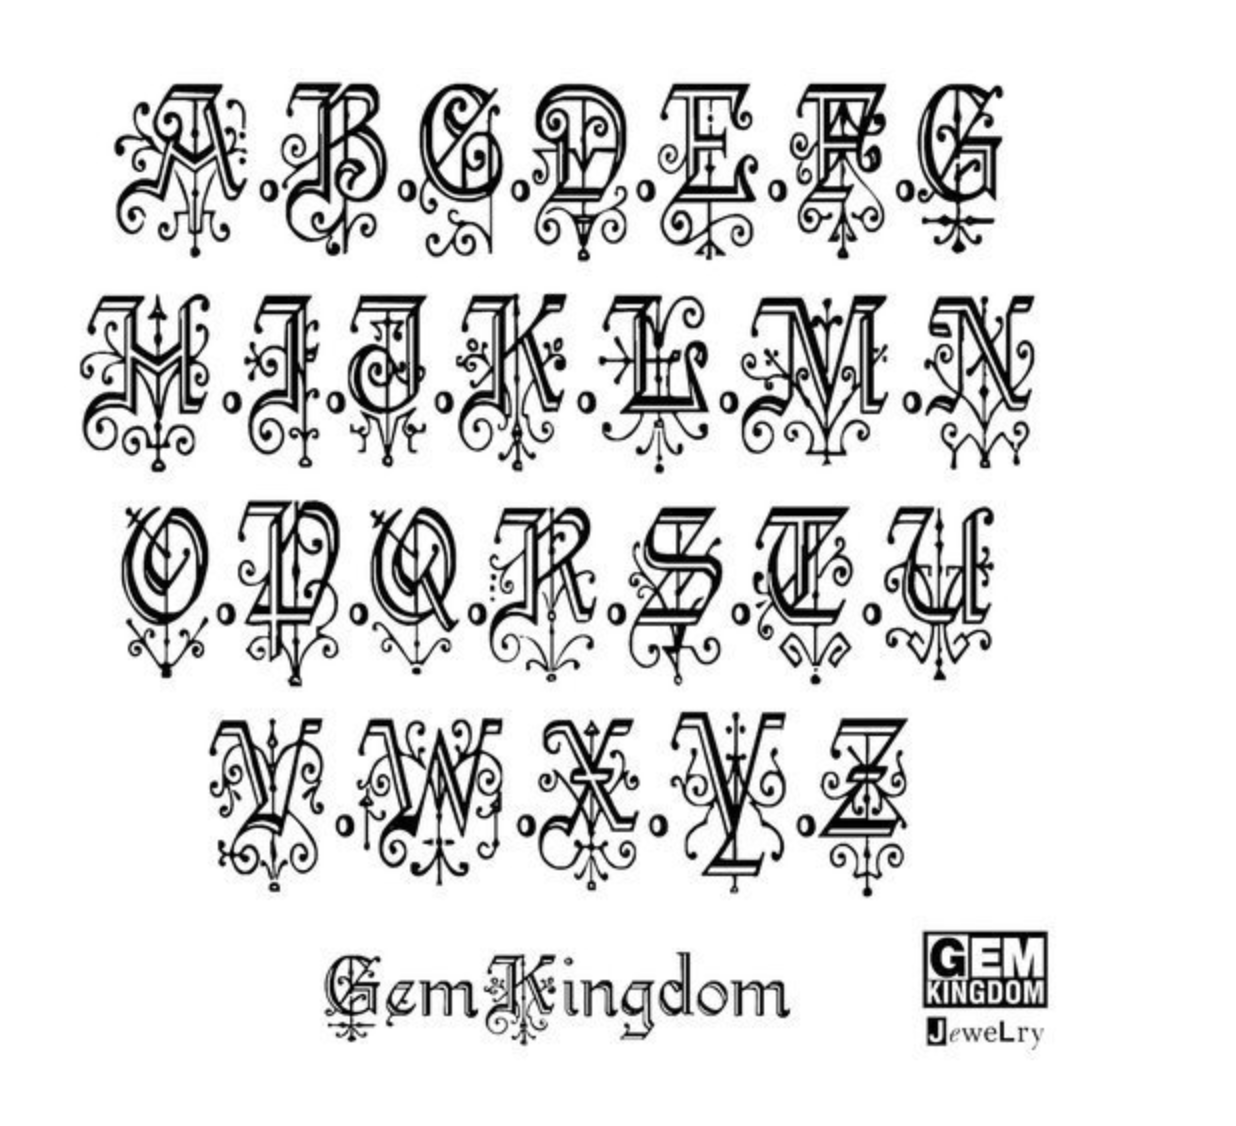 Gem Kingdom - Initials